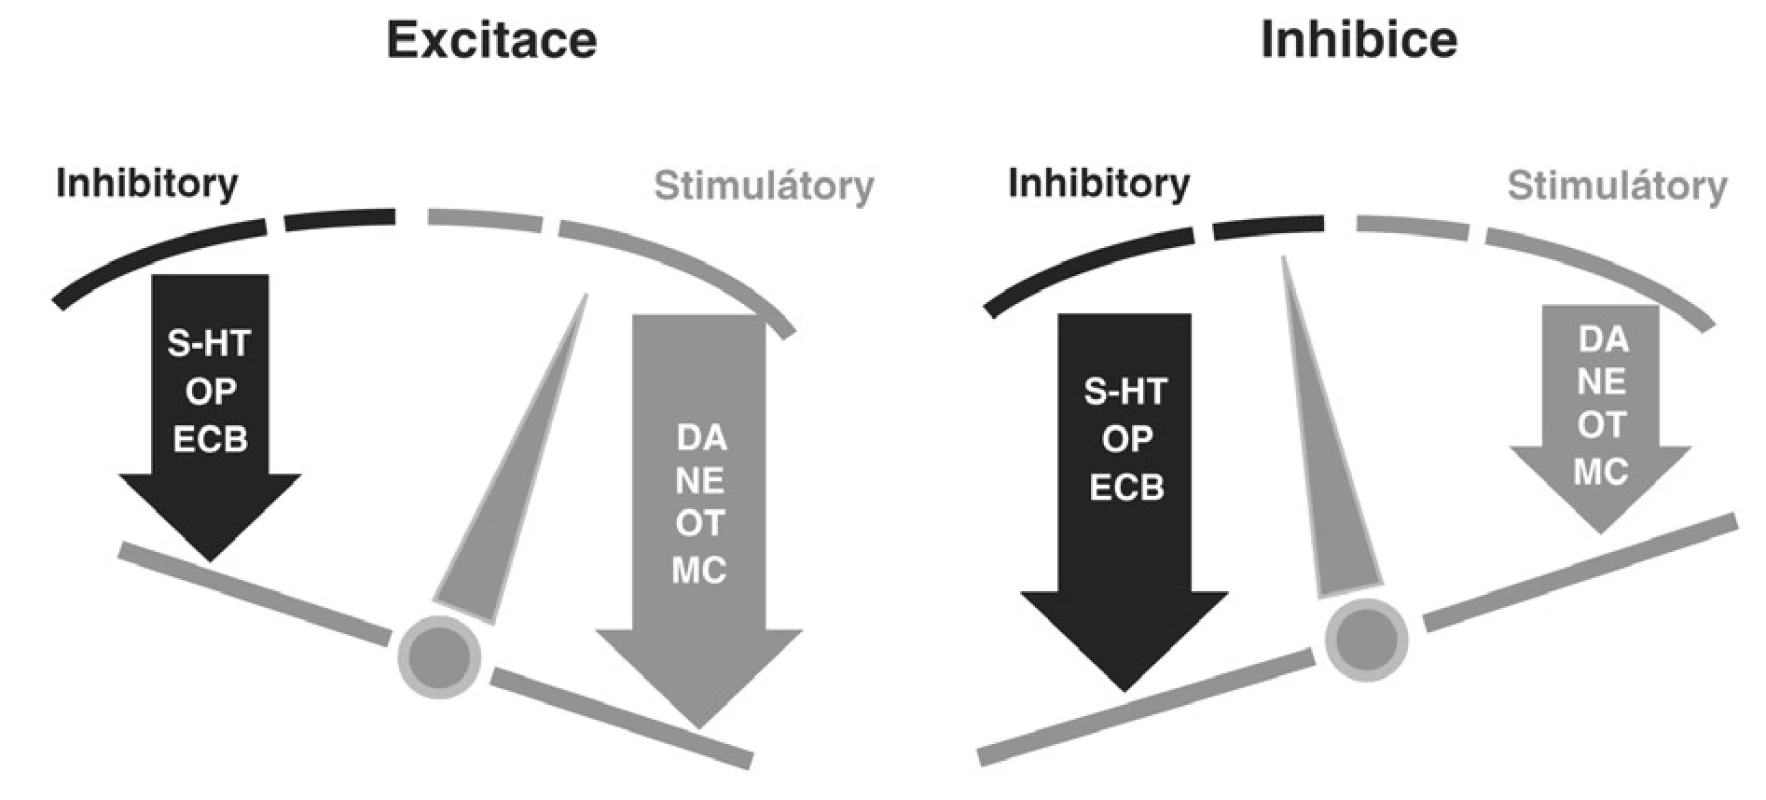 Mechanismy sexuální inhibice a excitace. DA - dopamin, NE - noradrenalin, MC - melanokortiny, OT - oxytocin, OP - opioidy, ECB - endokanabioidy, SE - serotonin Zdroj: Pfaus, J. J Sex Med, 2009. Převzato dle: Jansen, E., Bancroft, J. The dual kontrol model. The role of sexual inhibitioin and exciation in sexual arousal and behaviour. The psychiophysiology of sex. Edited by Janssen, E., Bloomington: Indiana University Press, 2007, p. 197-222